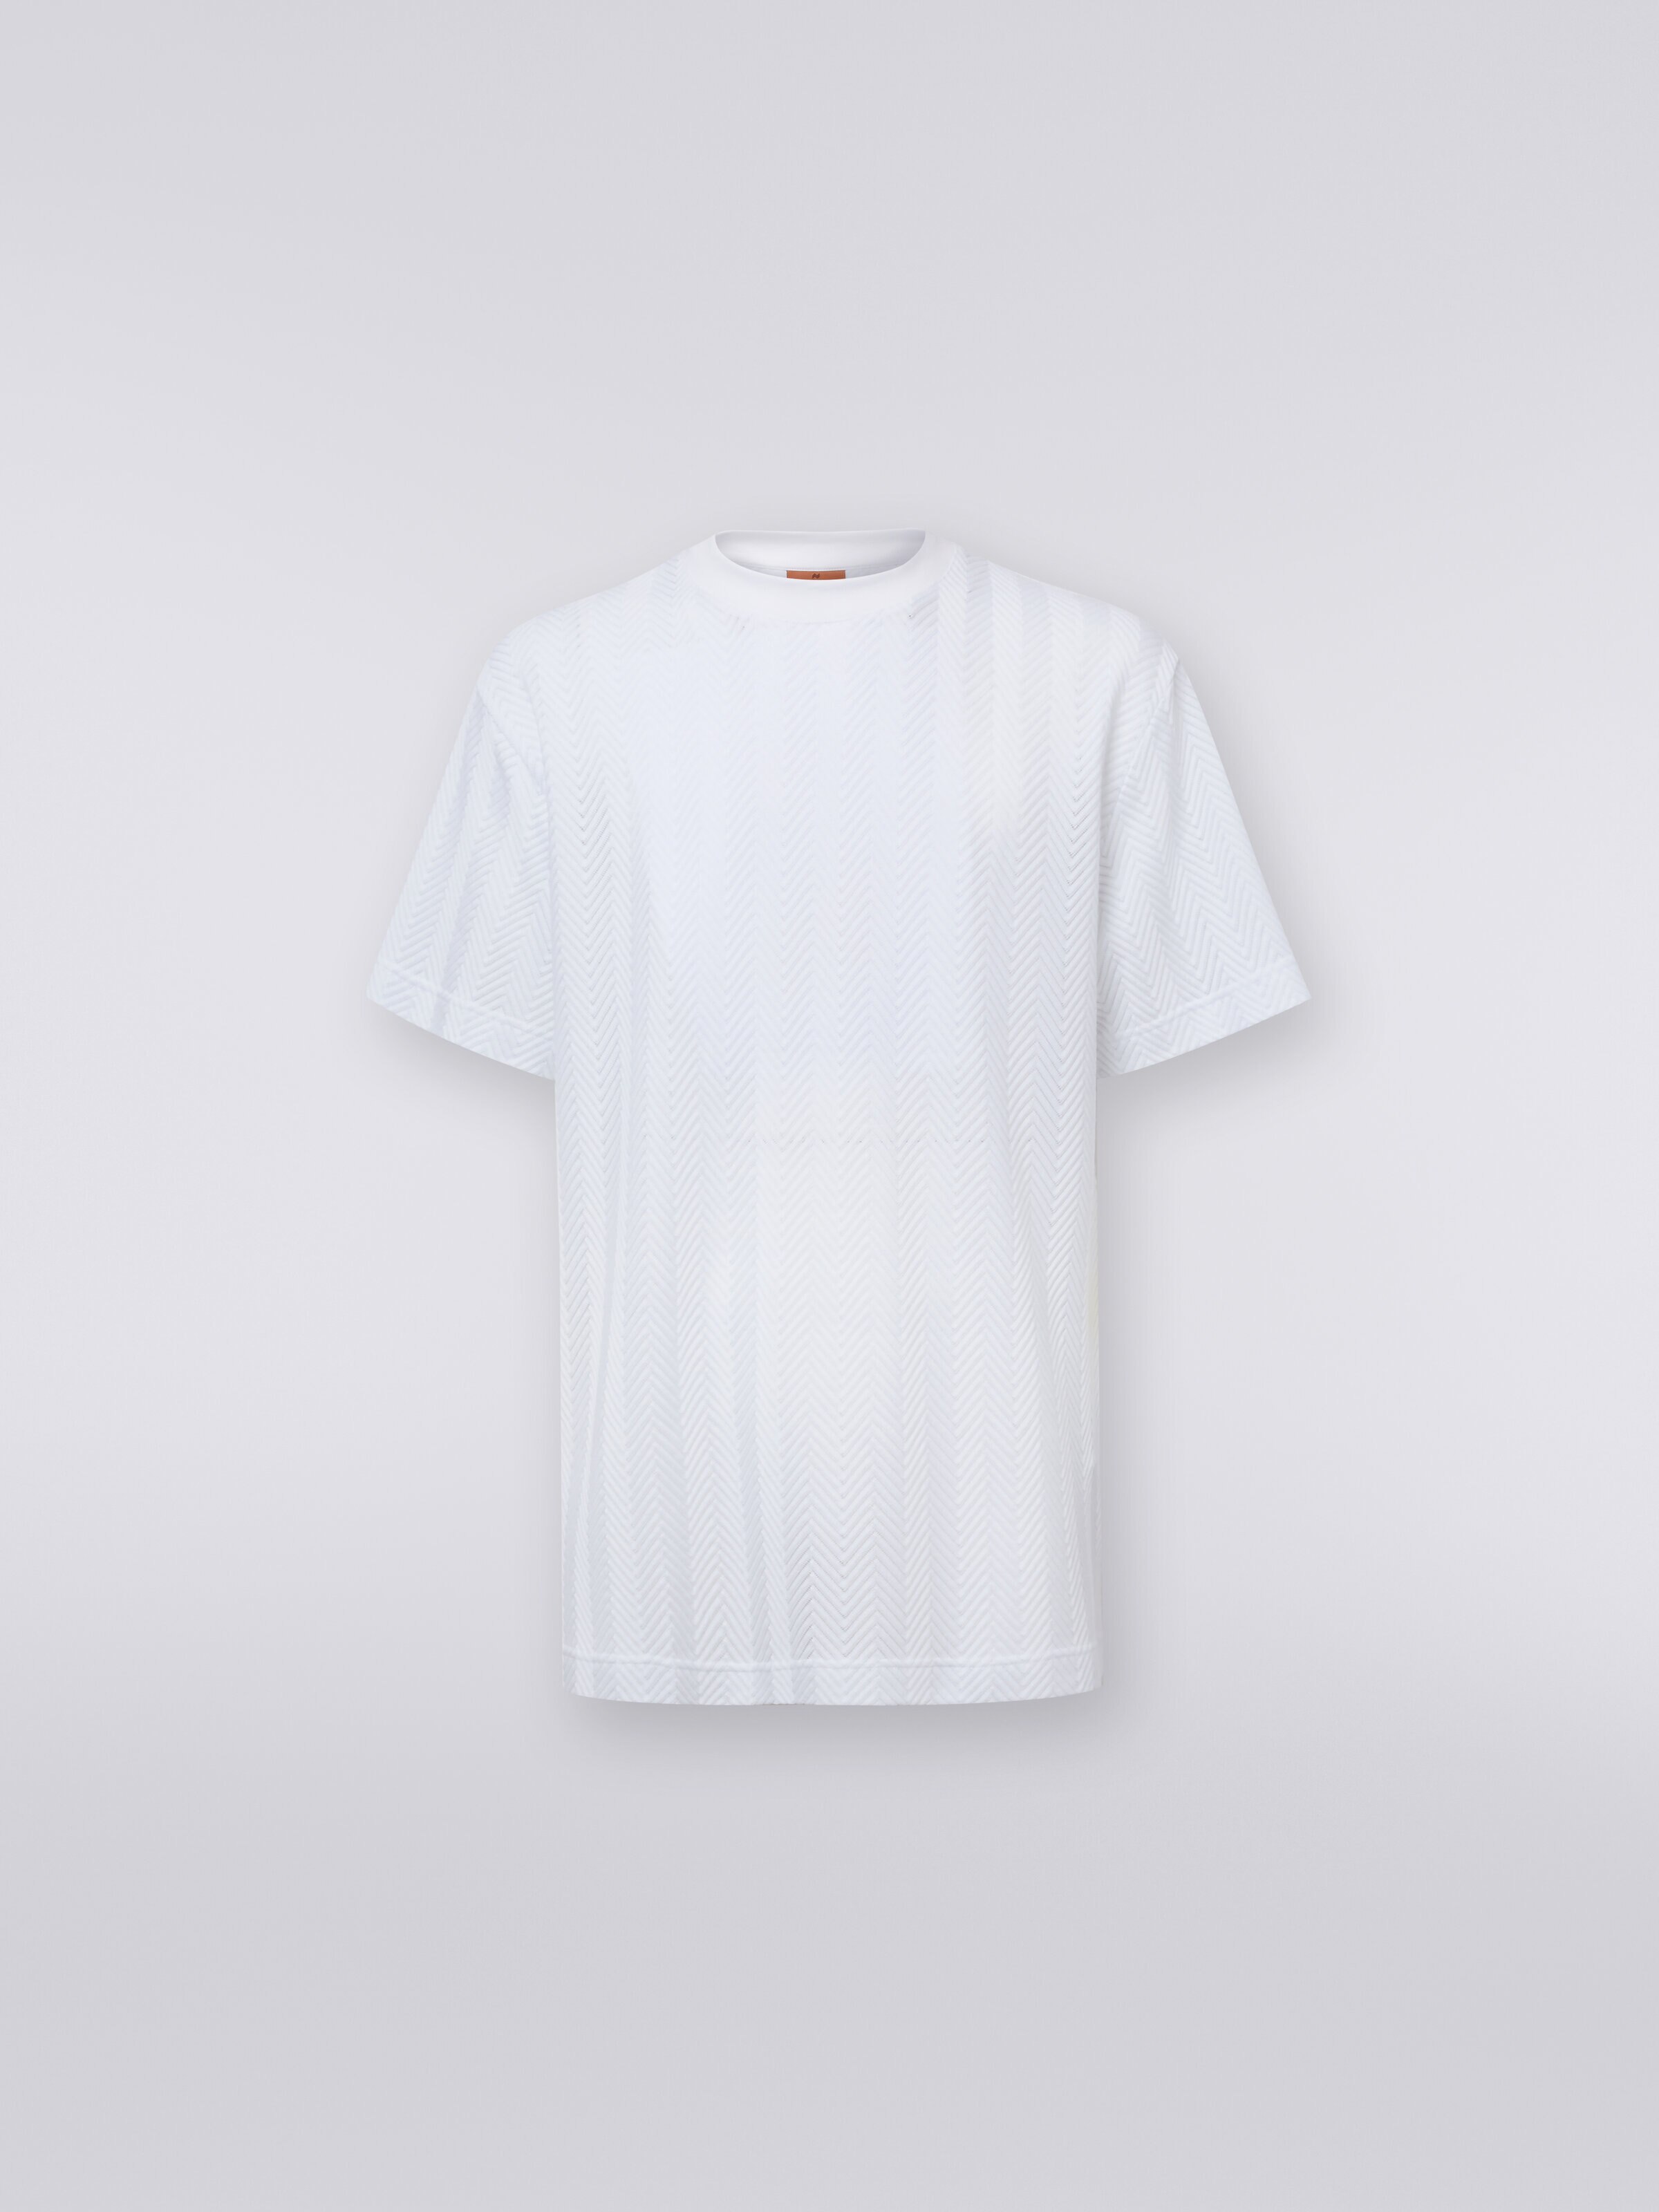 Crew-neck T-shirt in chevron viscose and cotton, White  - 0